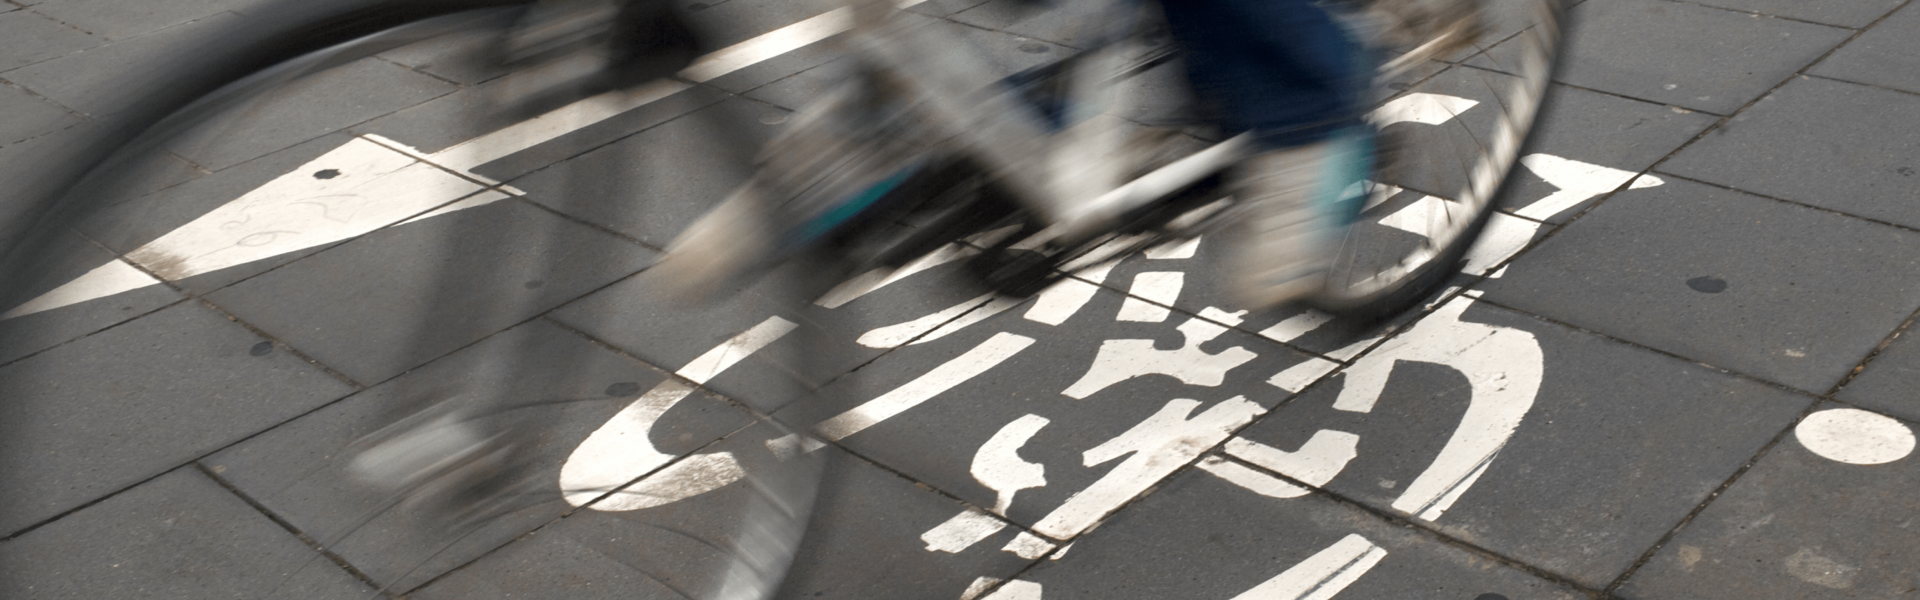 Close up image of cycle lane markings